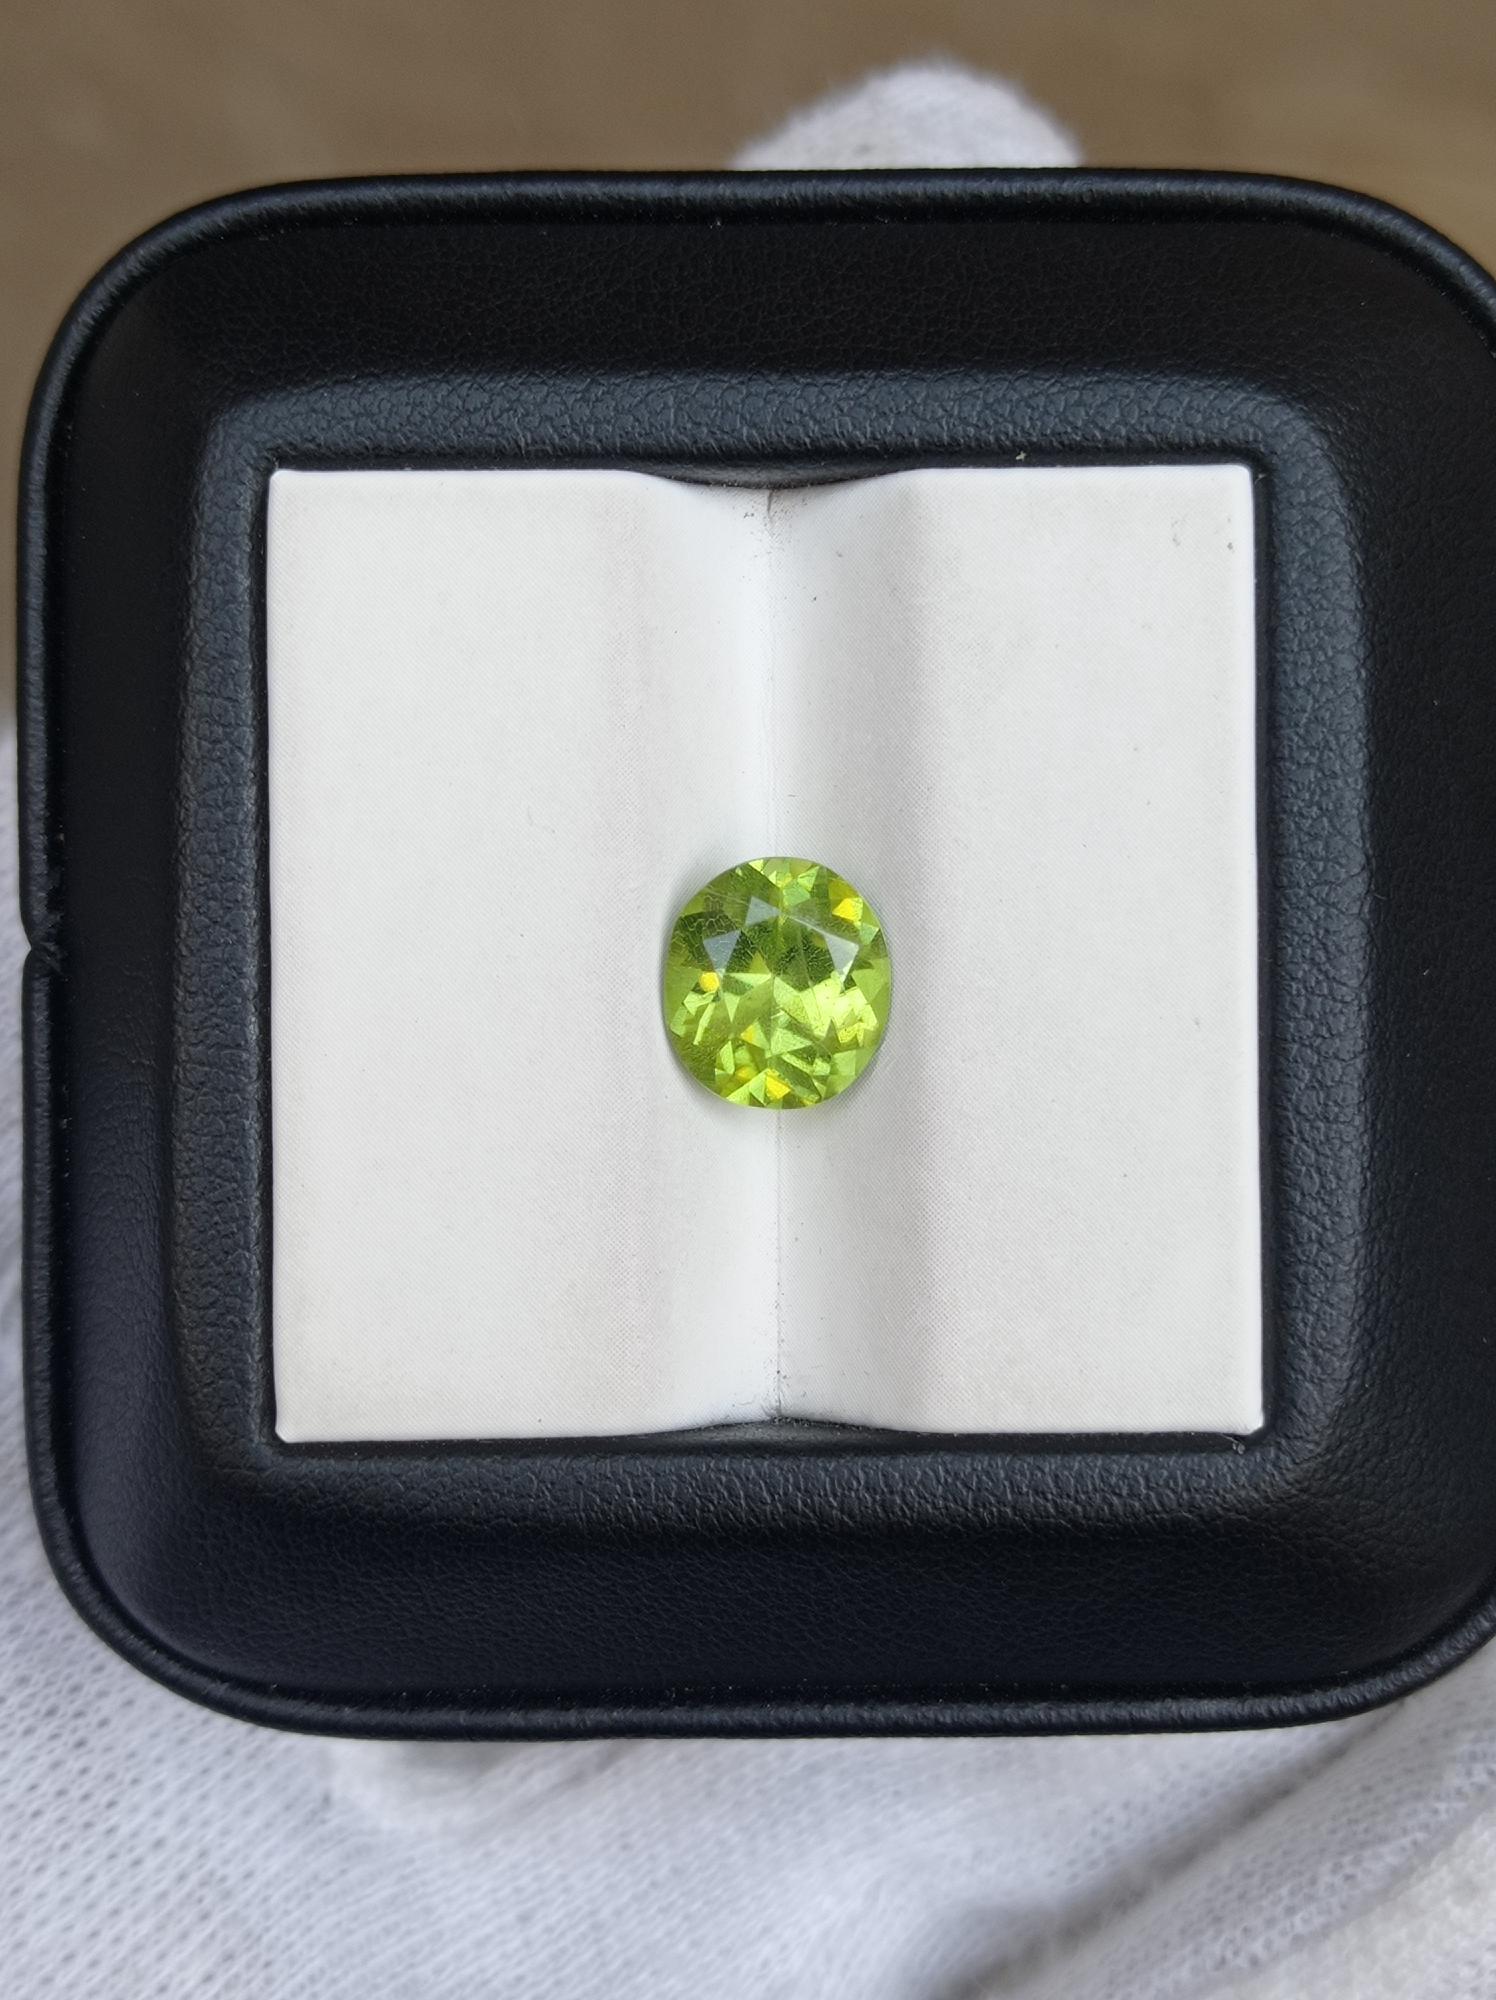 2.5ct Peridot Gemstone- Olivine - Chrysolite Gem - August Birthstone -  9x8x5mm